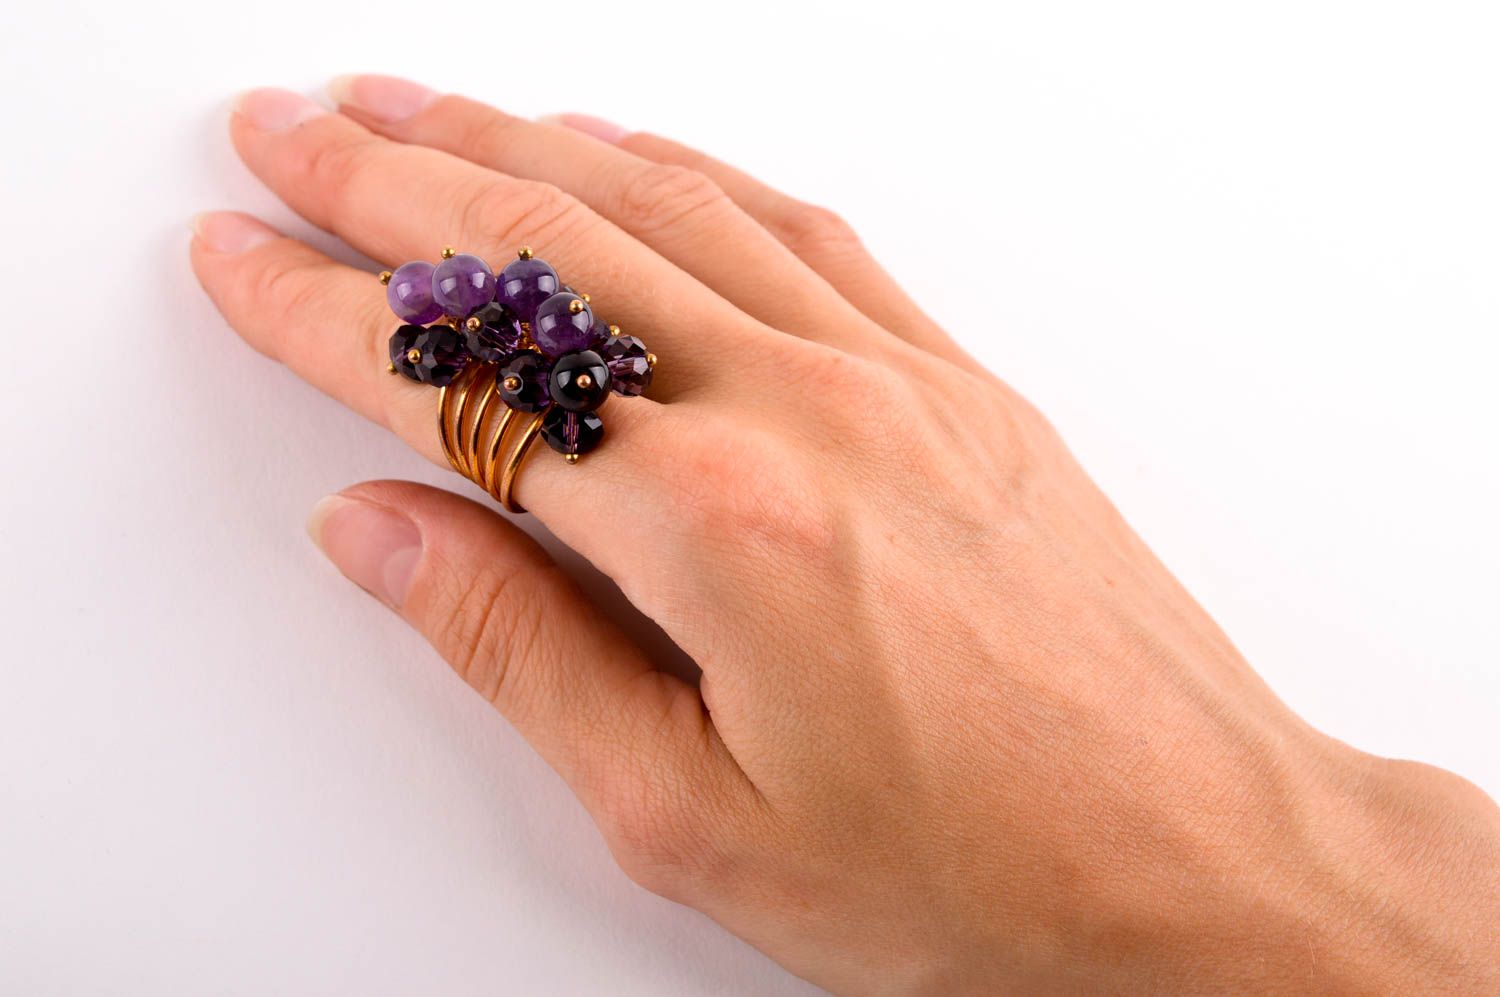 Handmade ring beautiful ring with stones designer accessory unusual jewelry photo 5